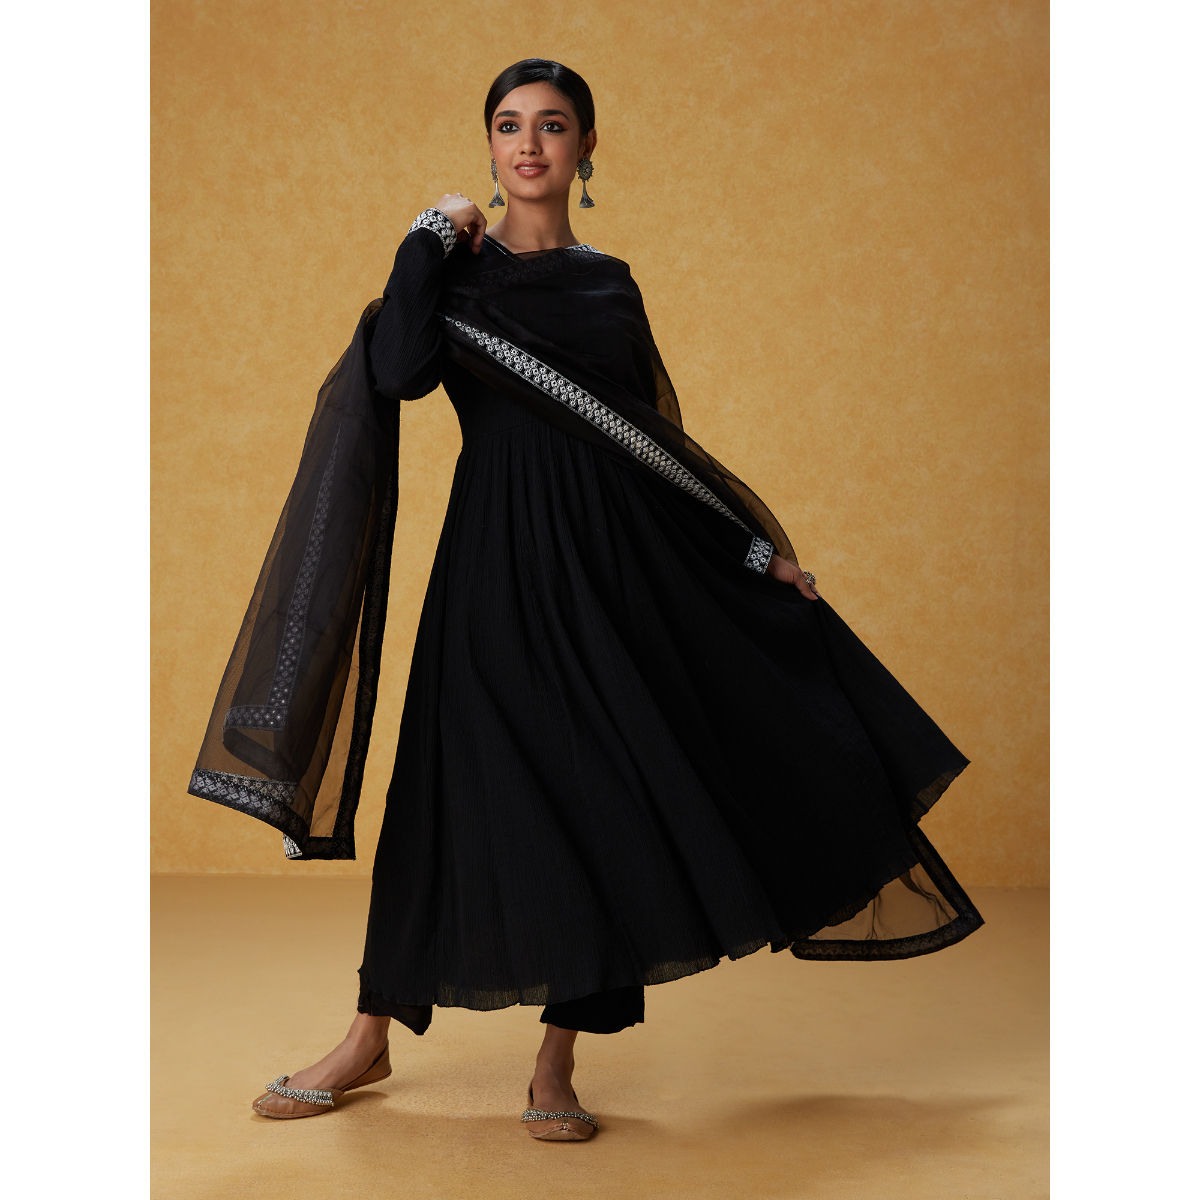 Buy black anarkali dress in India @ Limeroad